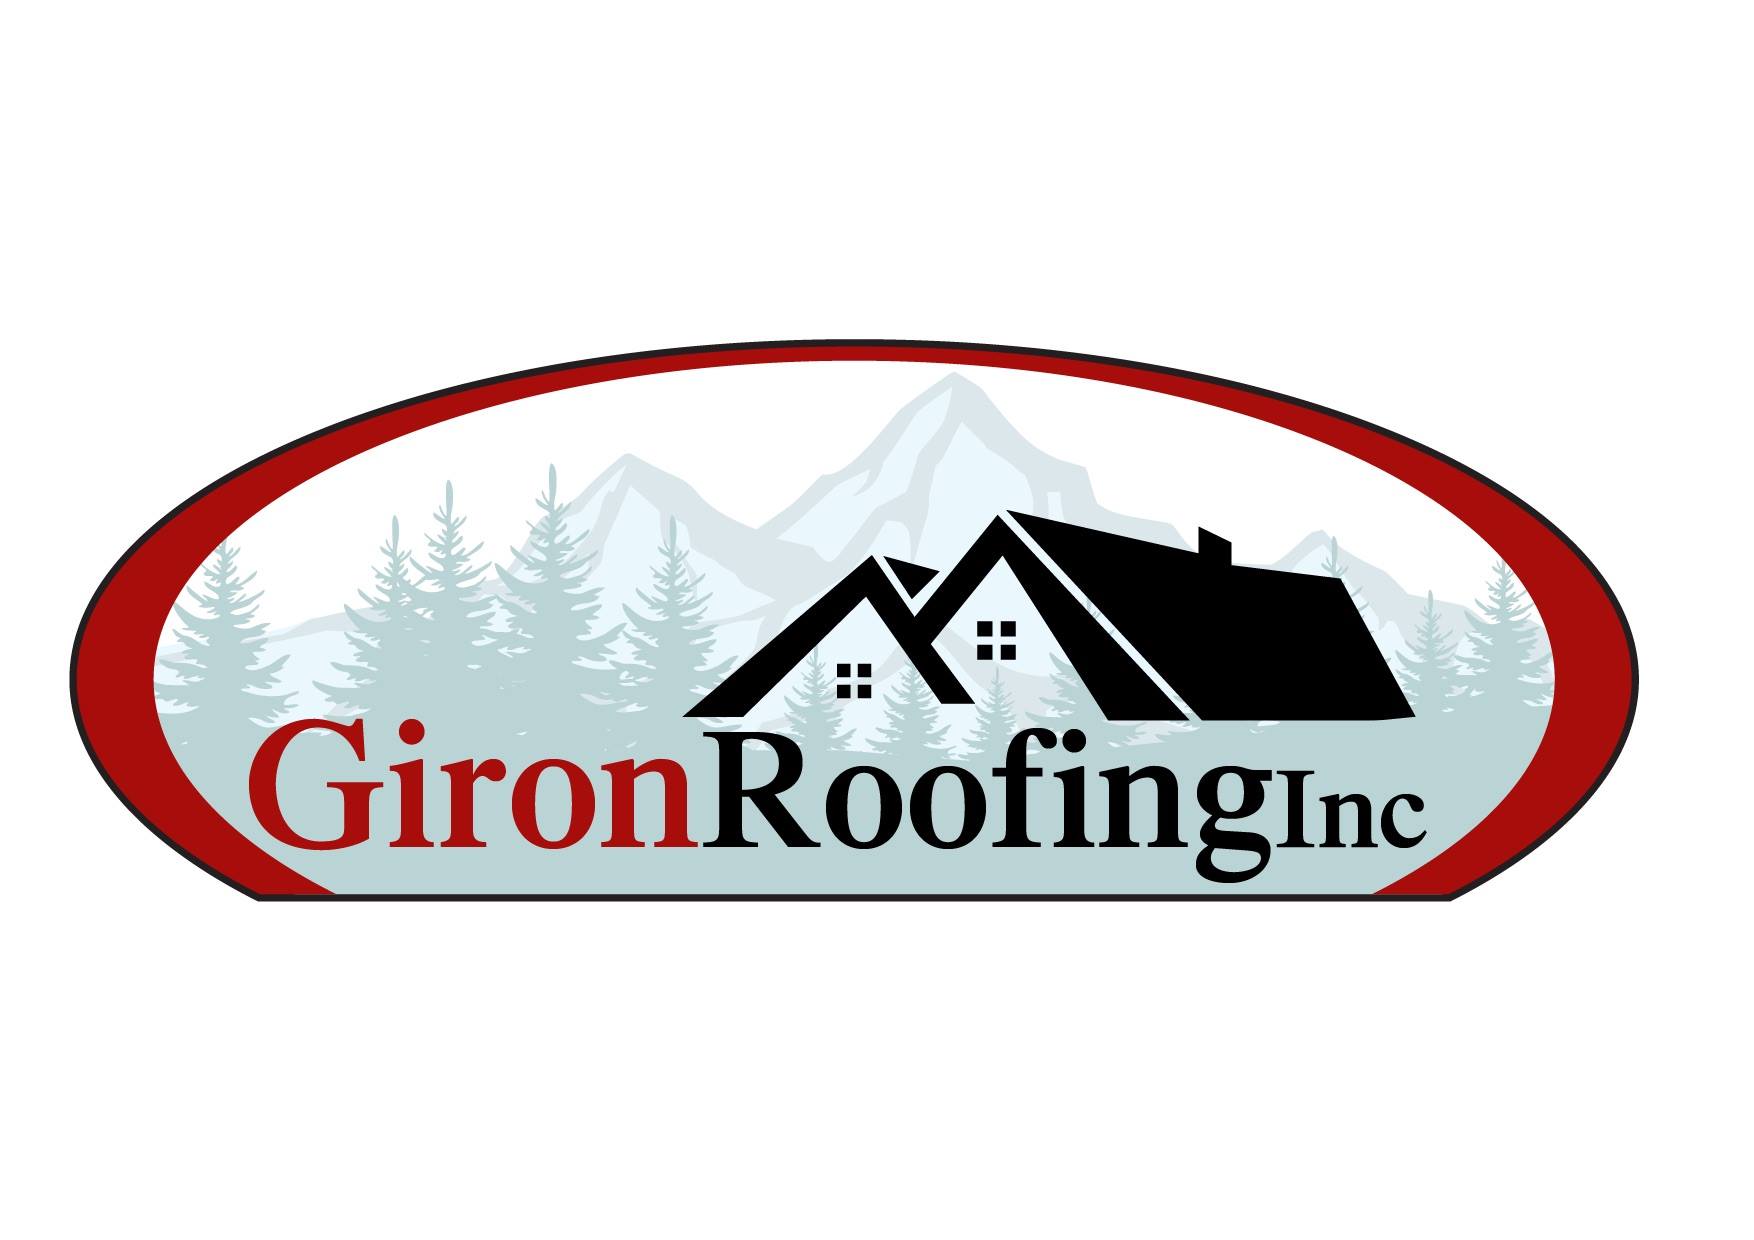 Giron Roofing Inc